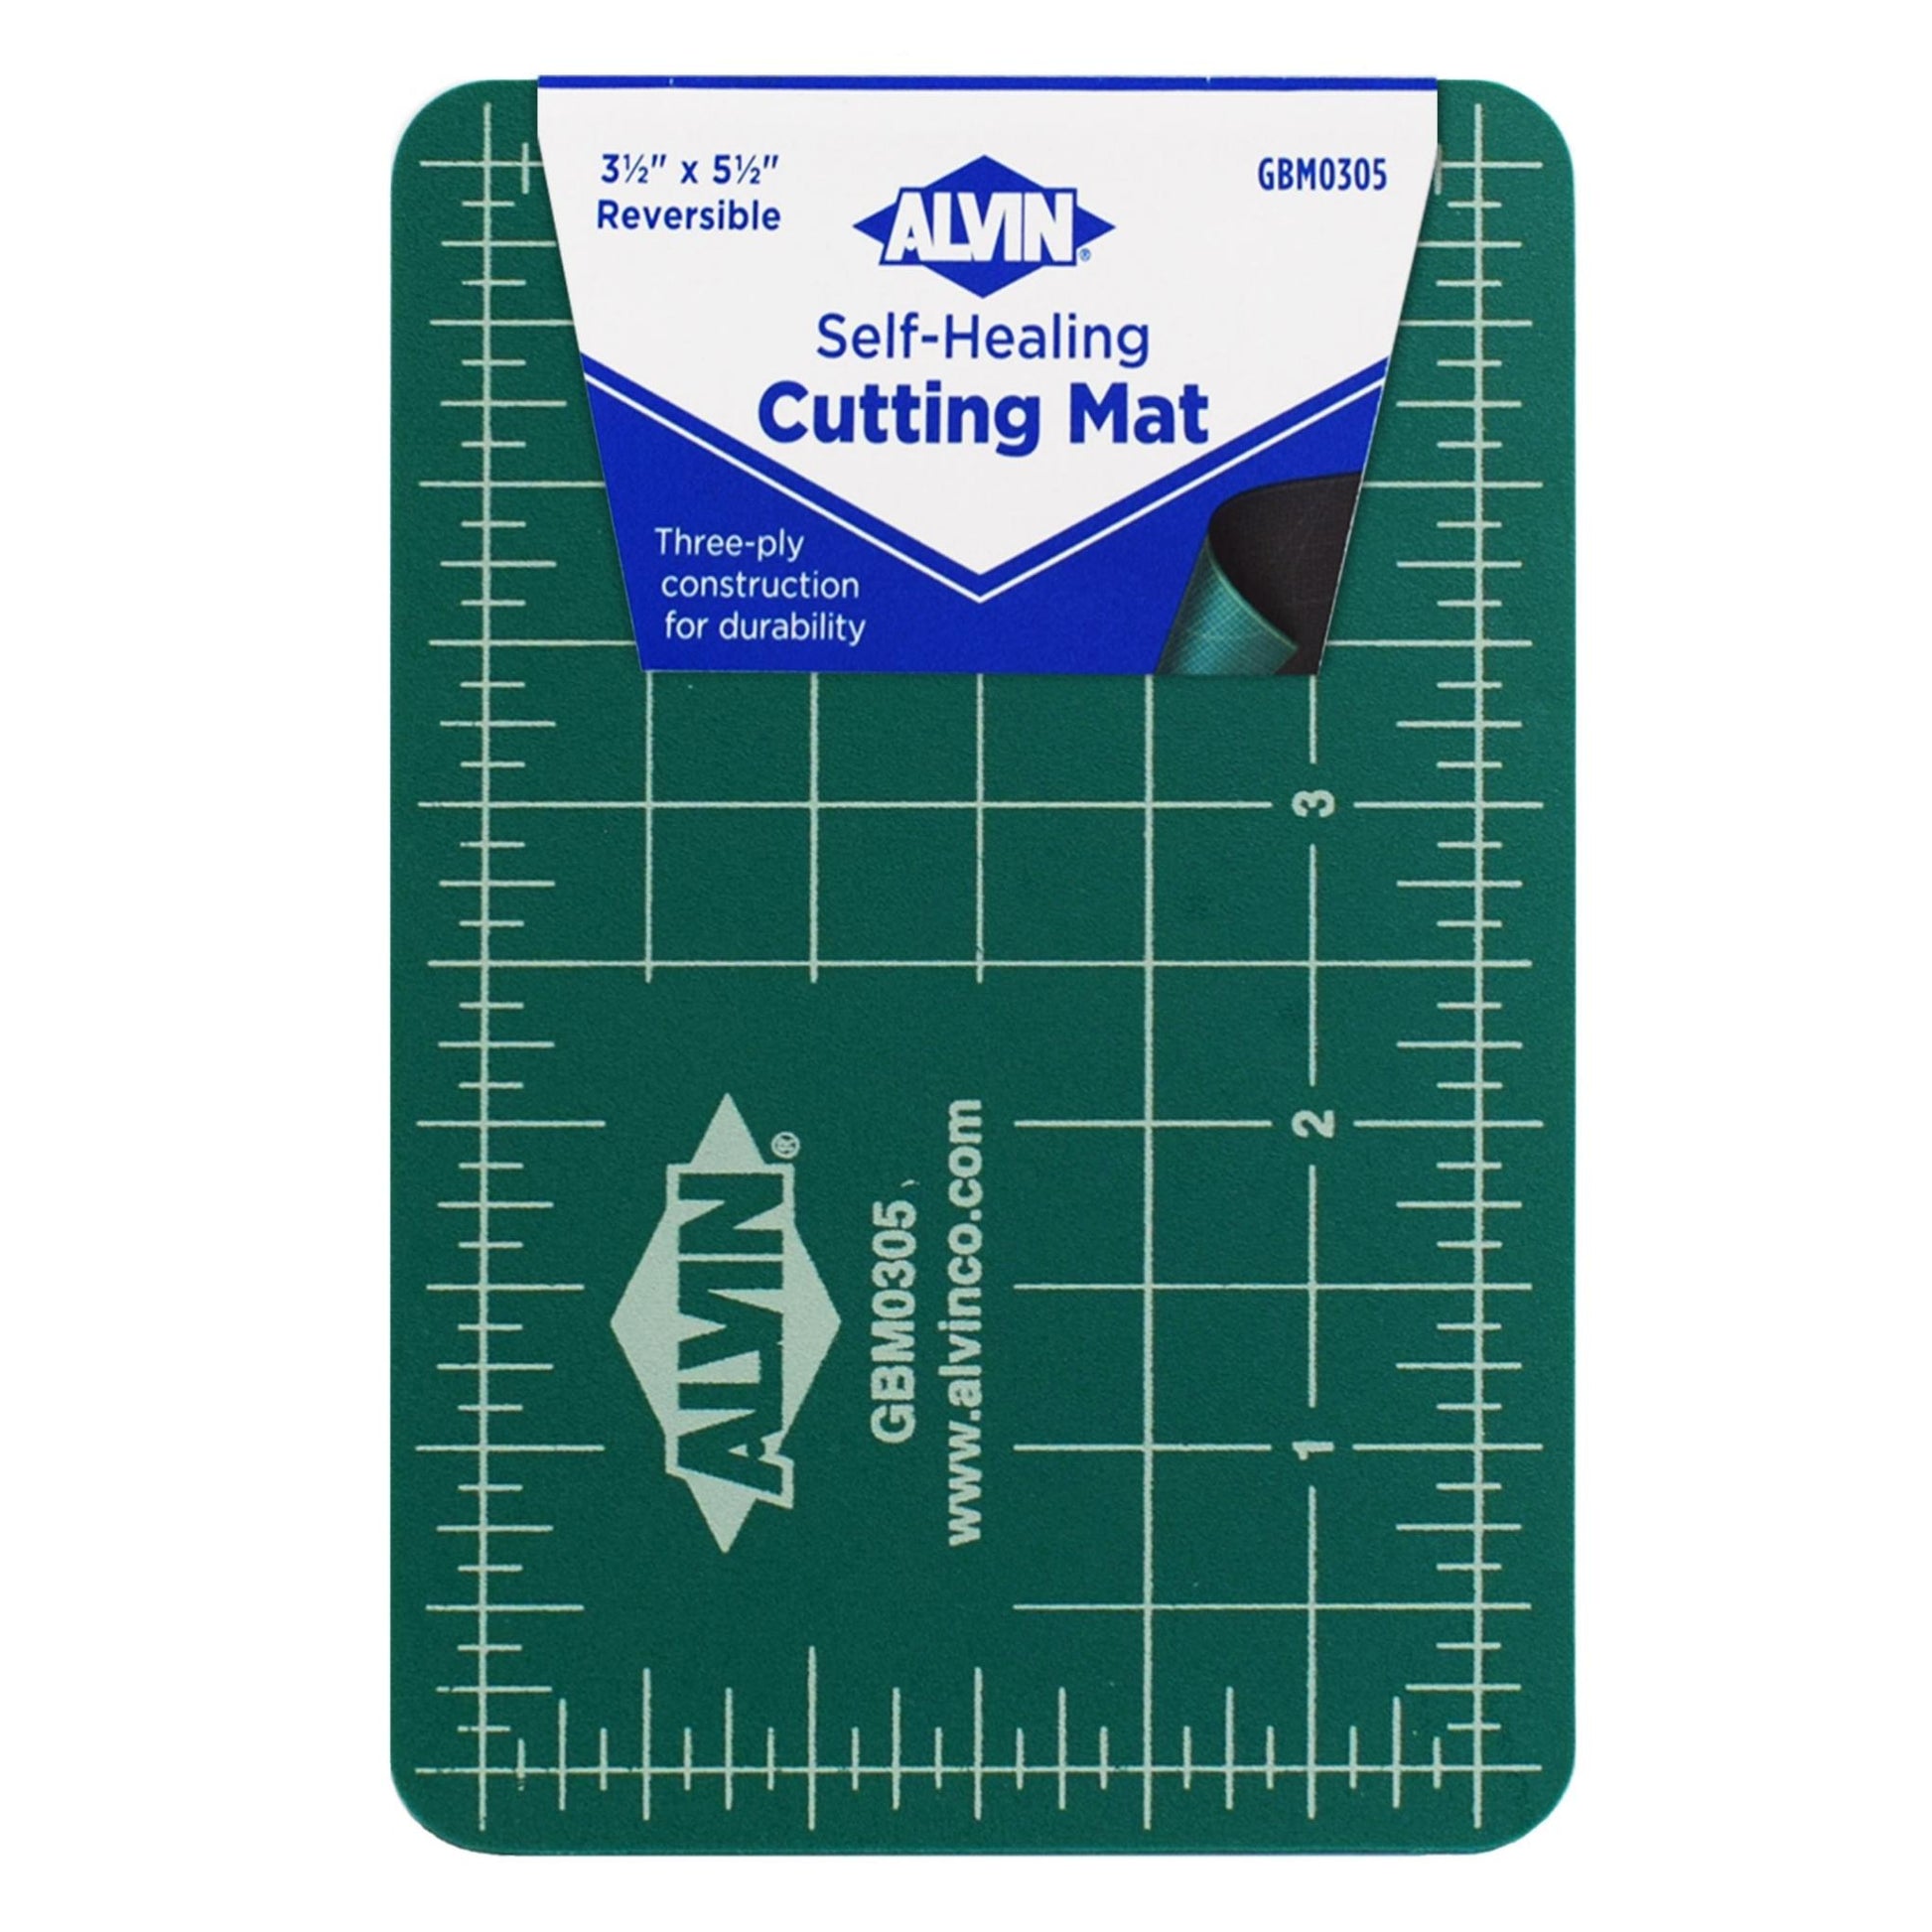 ALVIN GBM2436 Series Professional Self-Healing Cutting Mat, Green